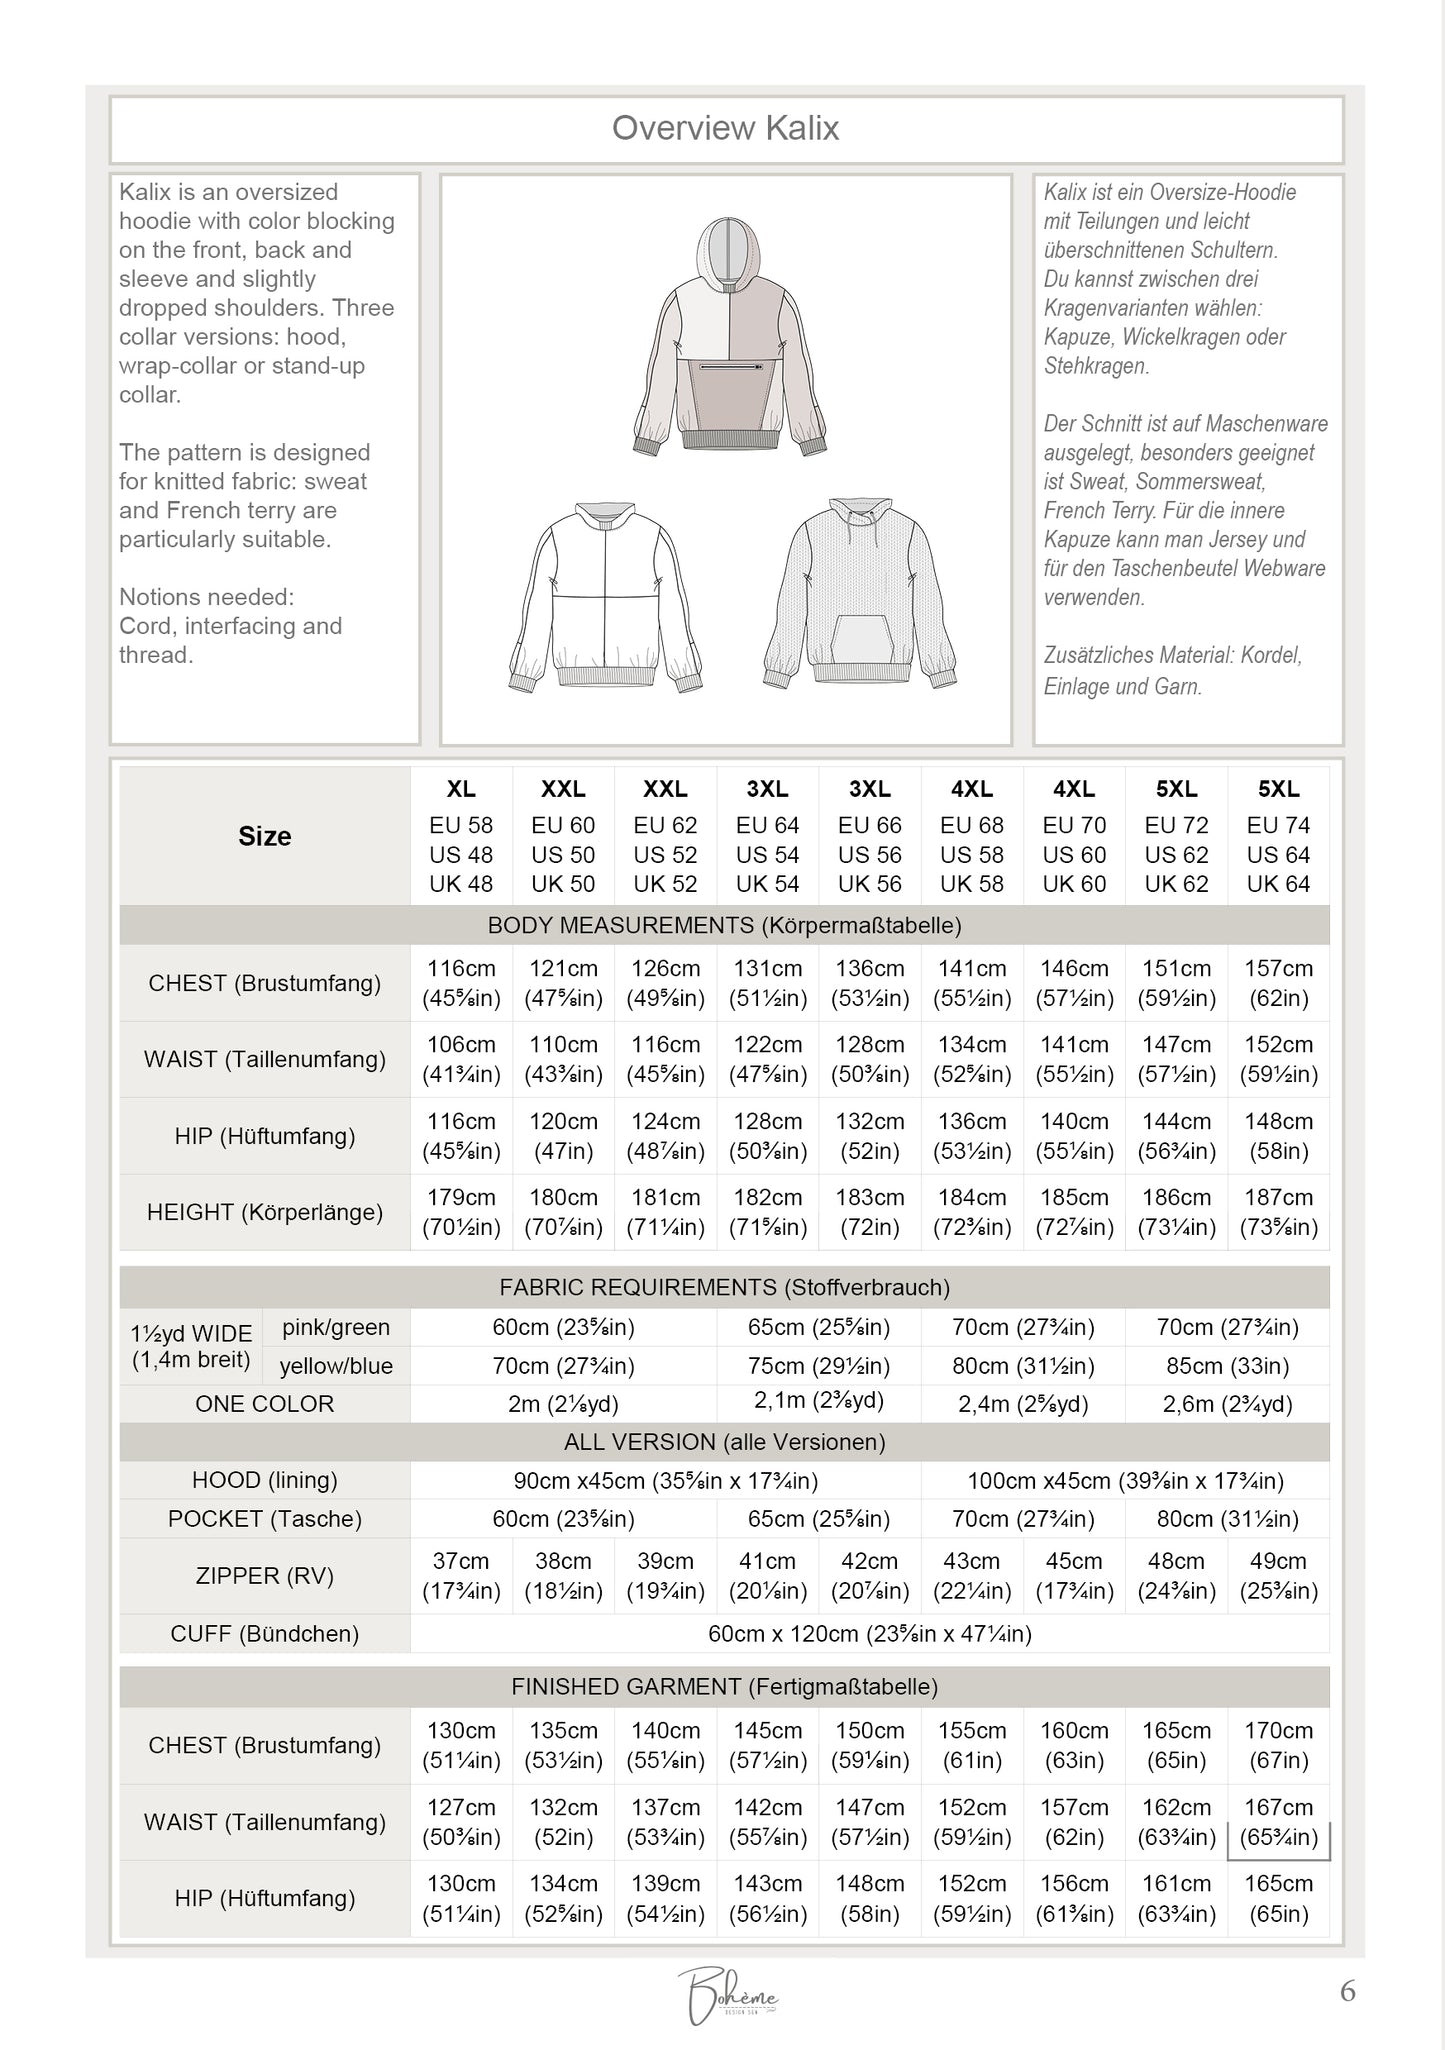 Hoodie | Kalix M2409 | Man XL - 5XL | Digital Sewing Pattern | PDF | Projector | Bohème | Pullover | Sweater | Color Blocking